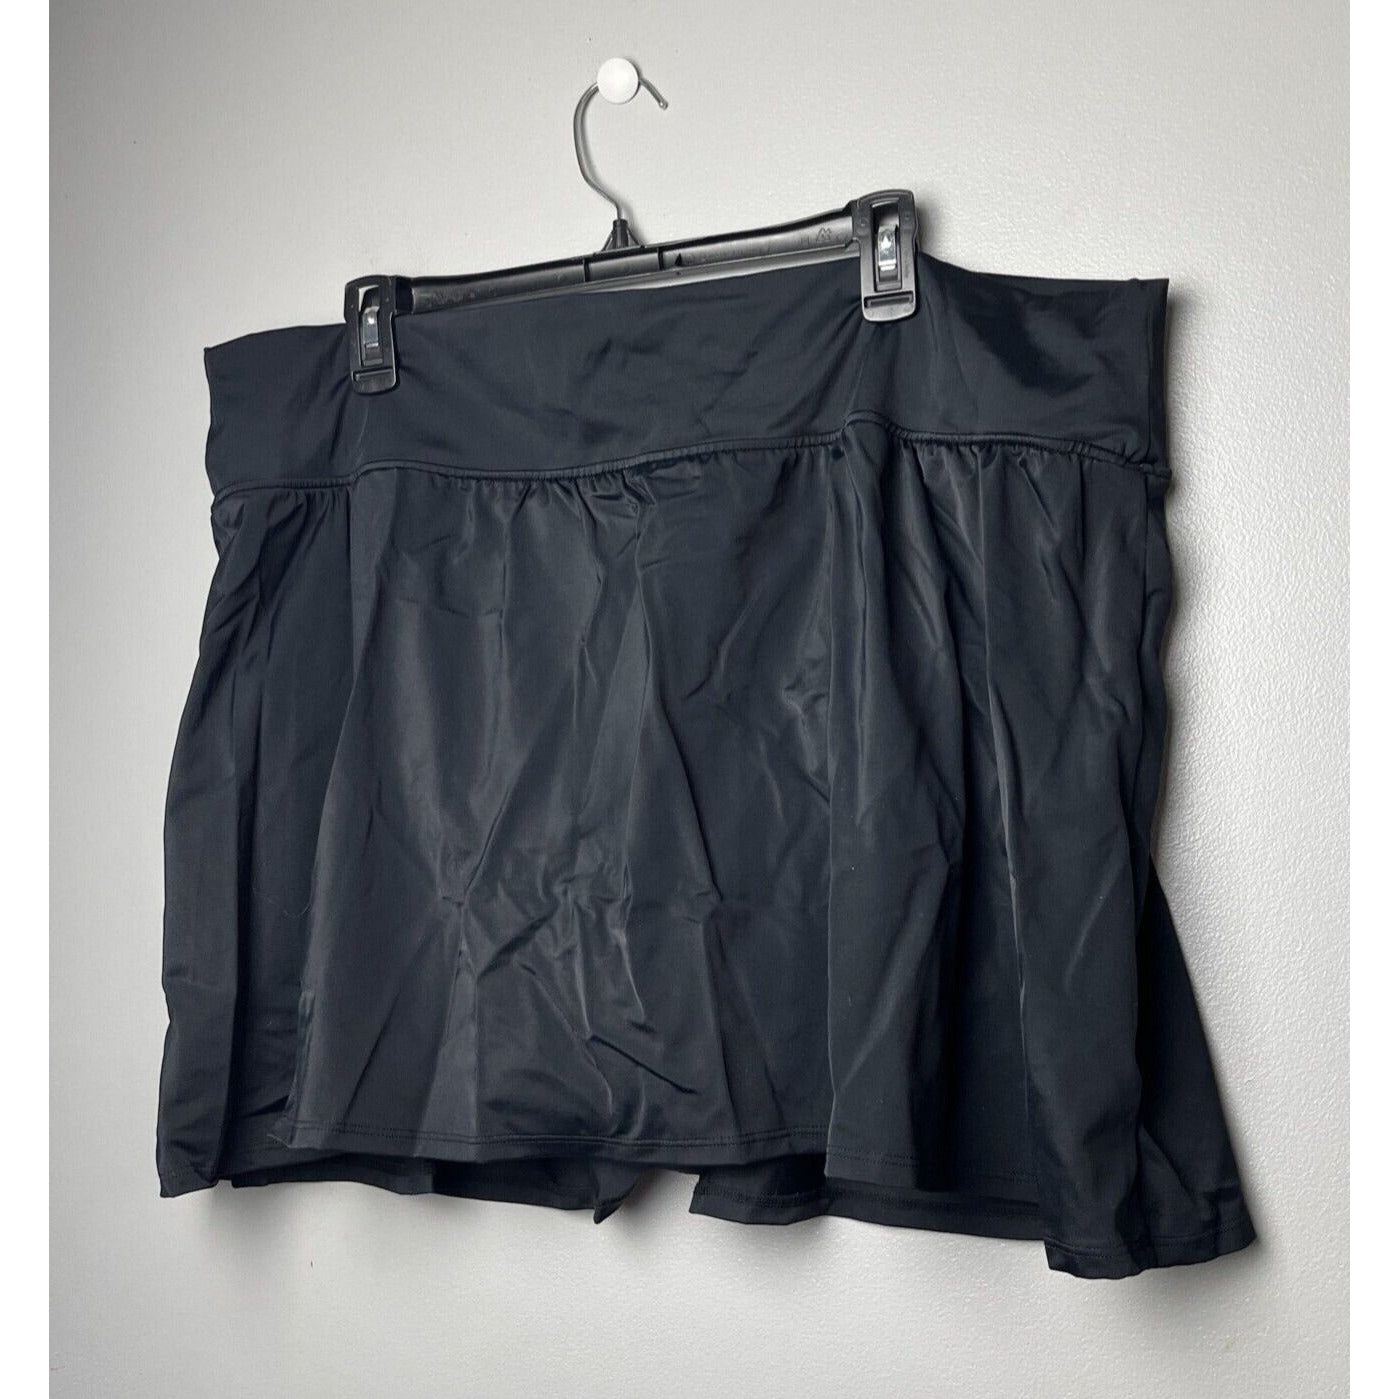 DreamShaper Miracle Suit Hank Tankini Skirt Black 22W NEW A484539